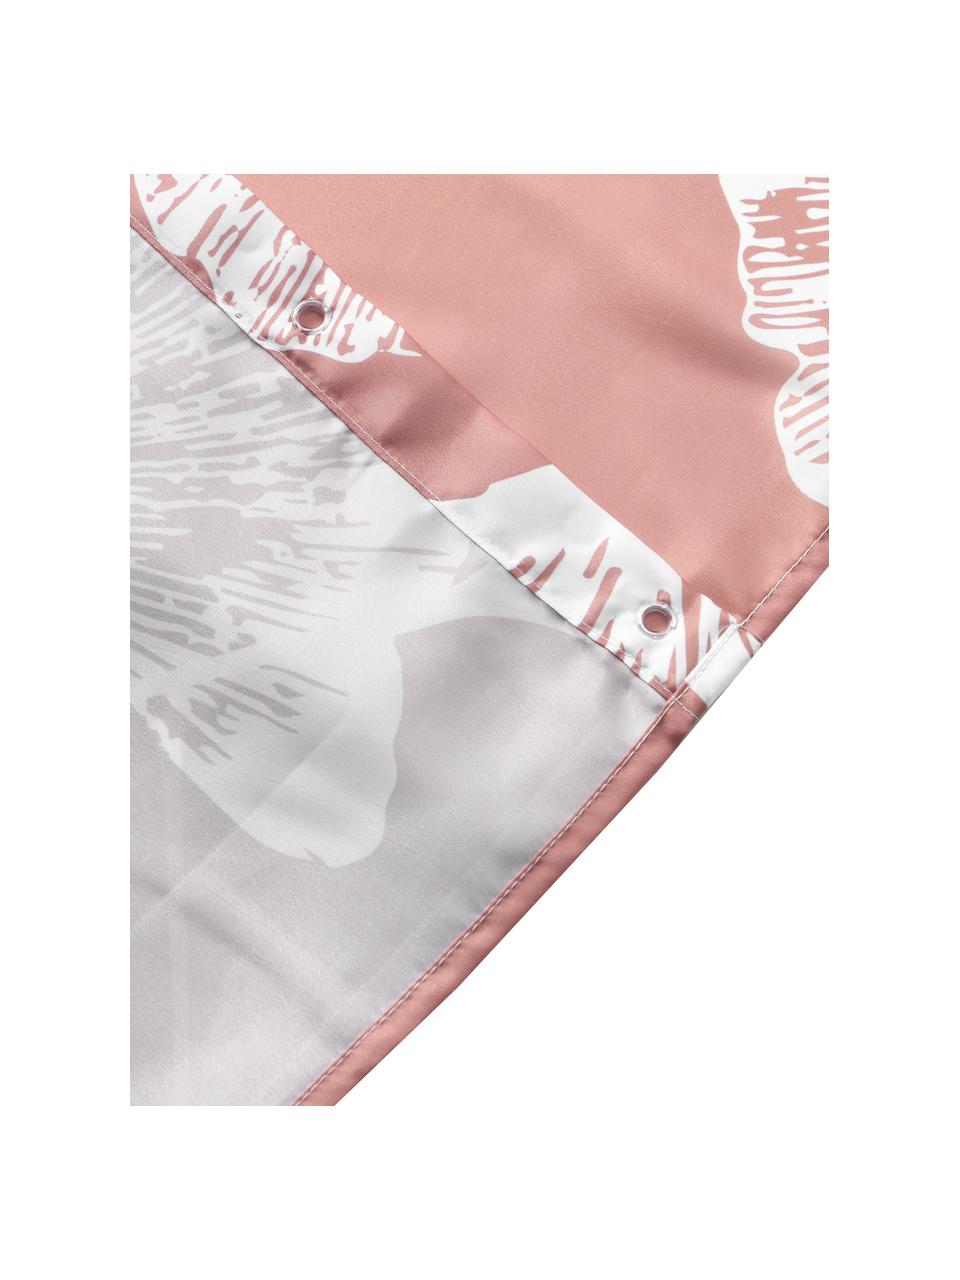 Duschvorhang Mare in Rosa, 100 % Polyester, Dunkelrosa, Weiss, B 180 x L 200 cm